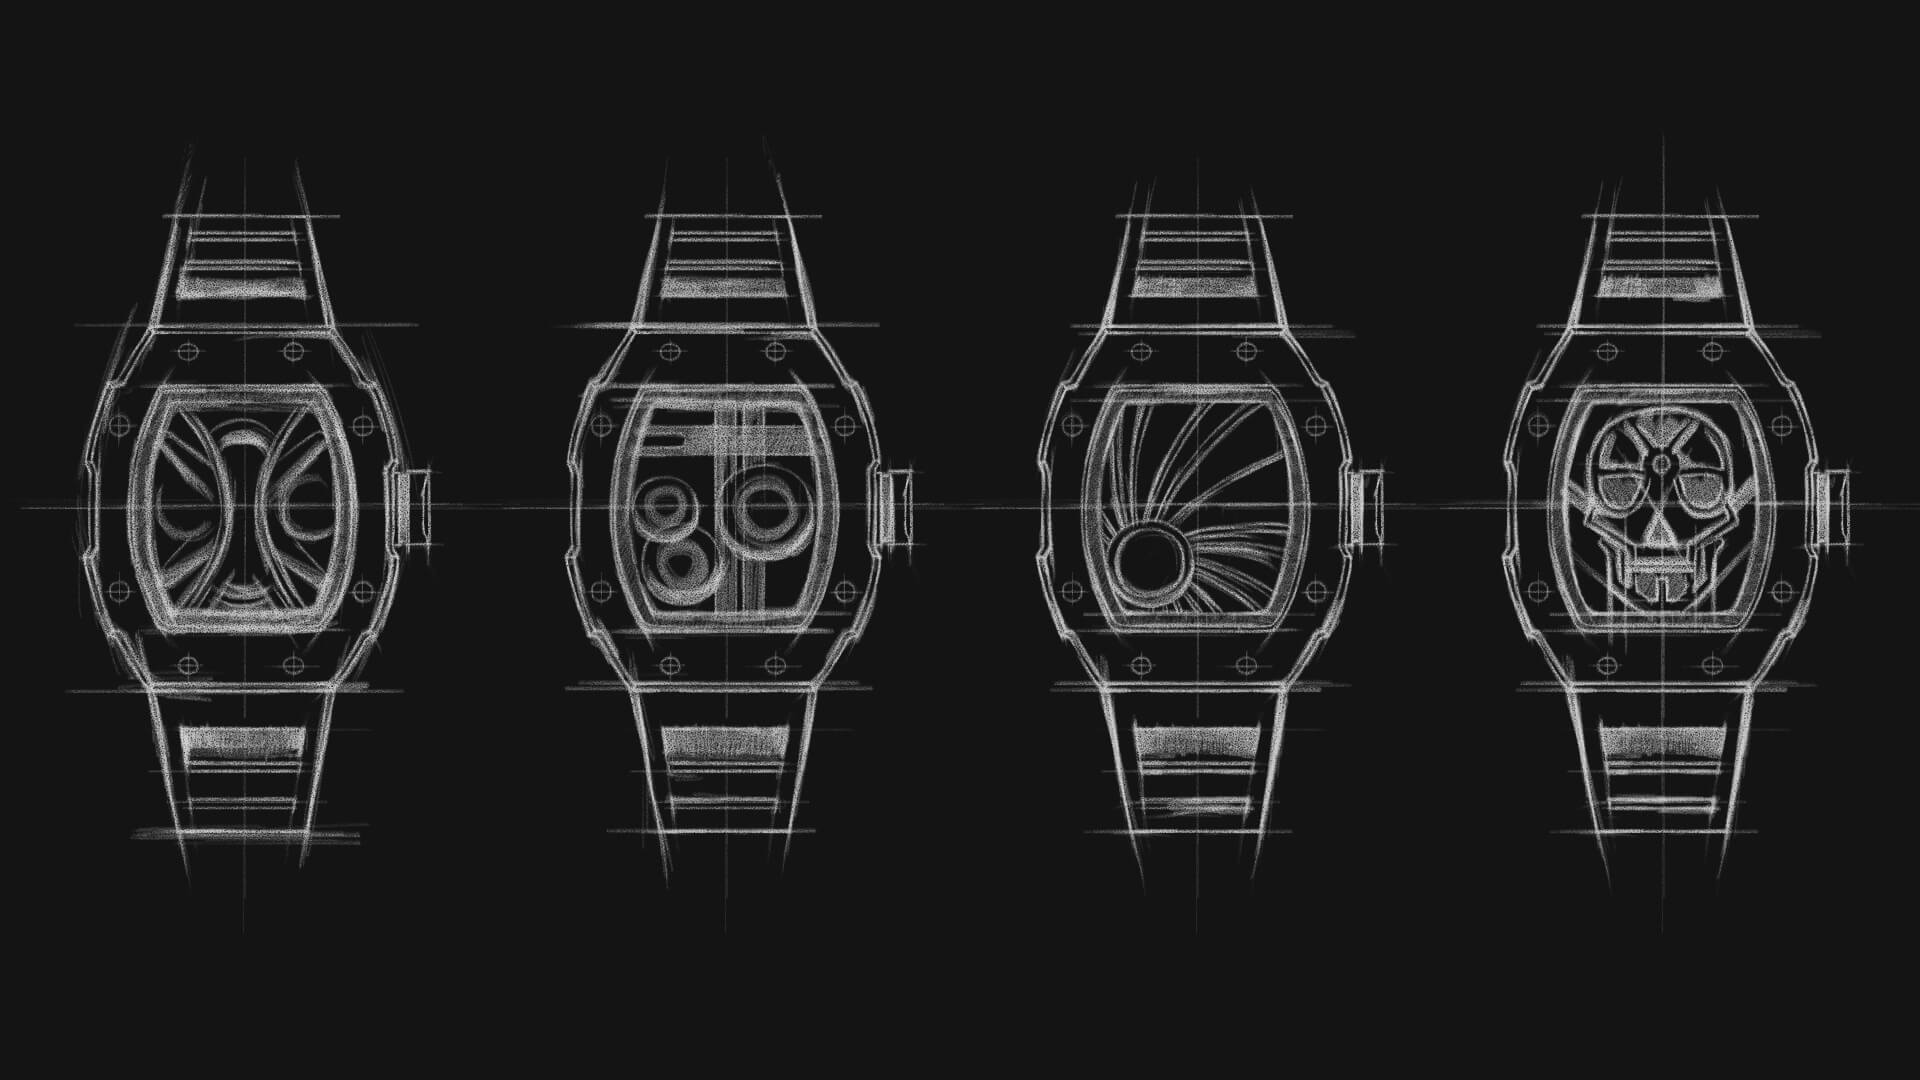 Mens tonneau skeleton mechanical Watch | Wishdoit Watches